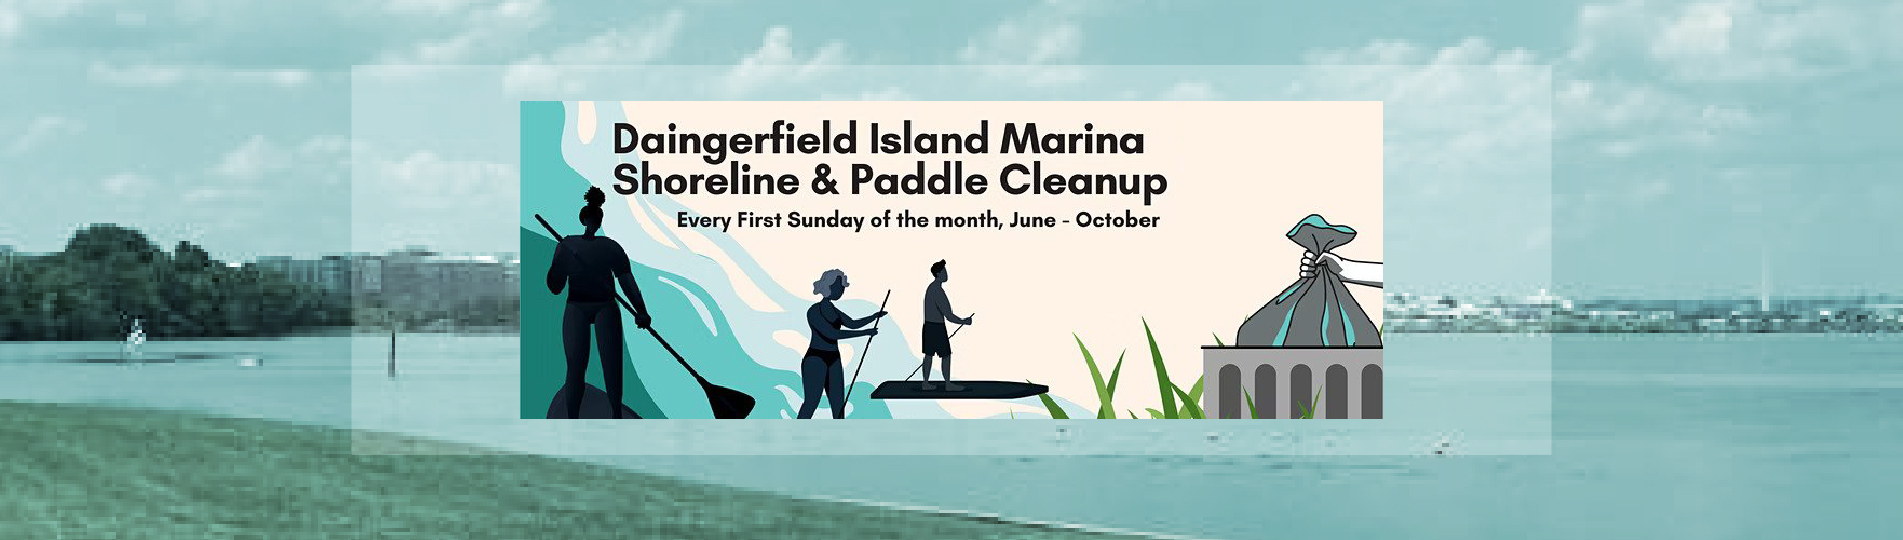 Daingerfield Island Marina River Cleanups 2022